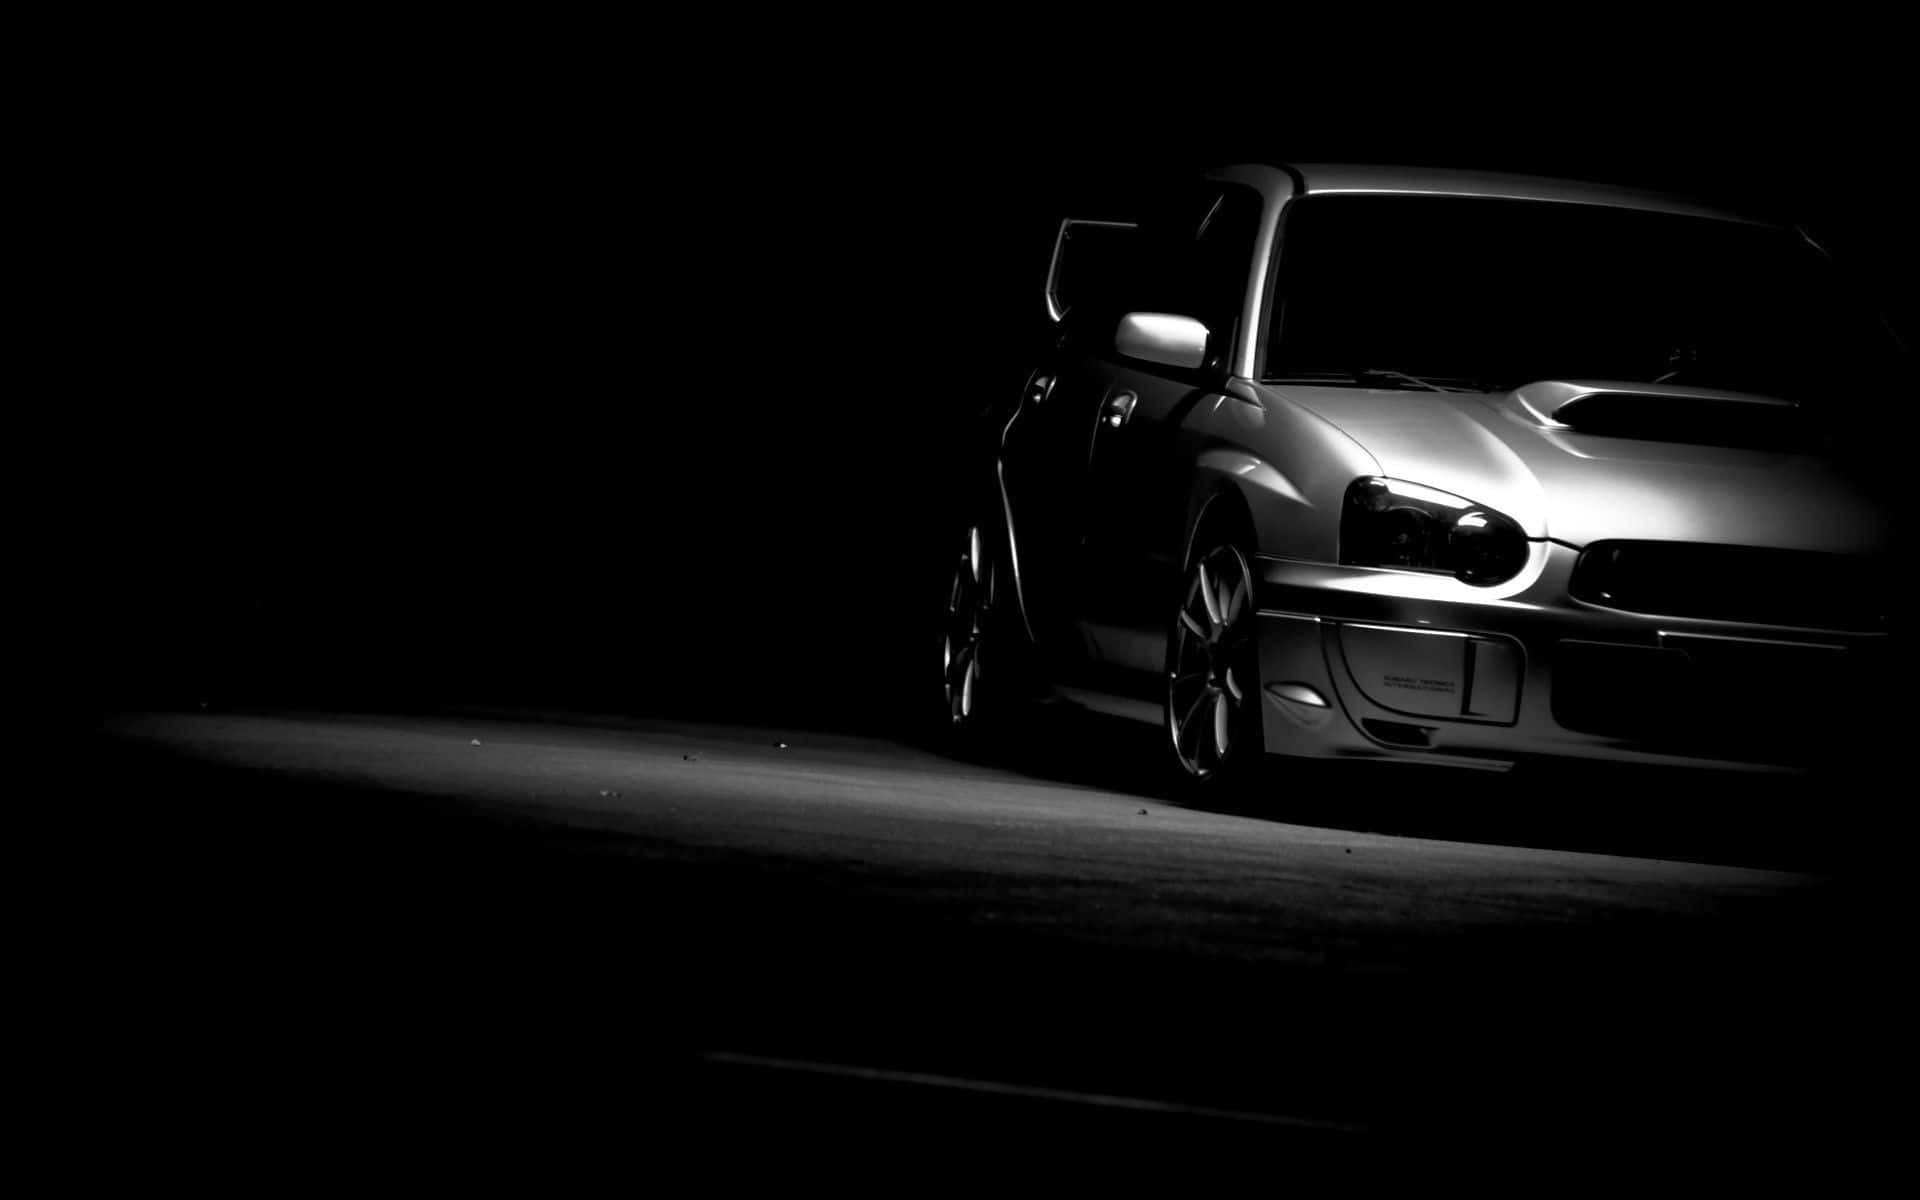 A Black And White Image Of A Subaru